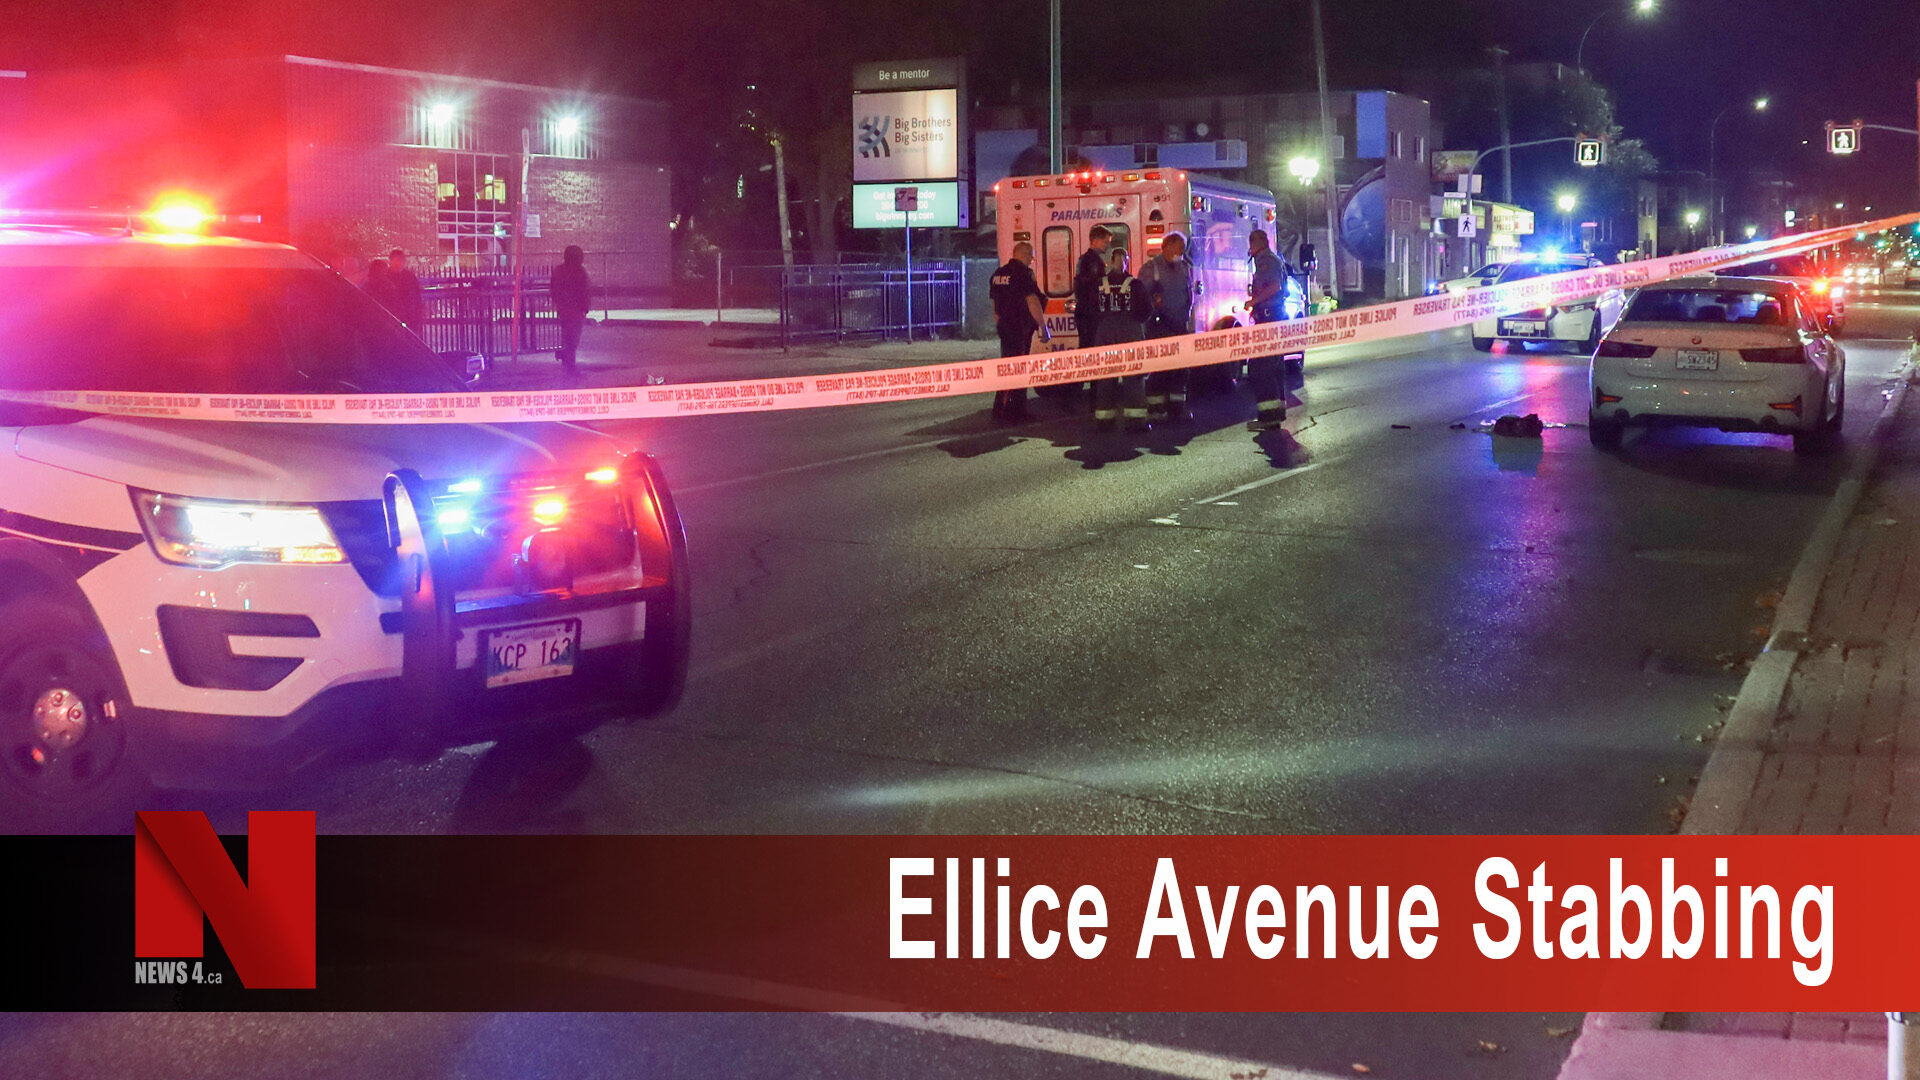 Ellice Avenue Stabbing